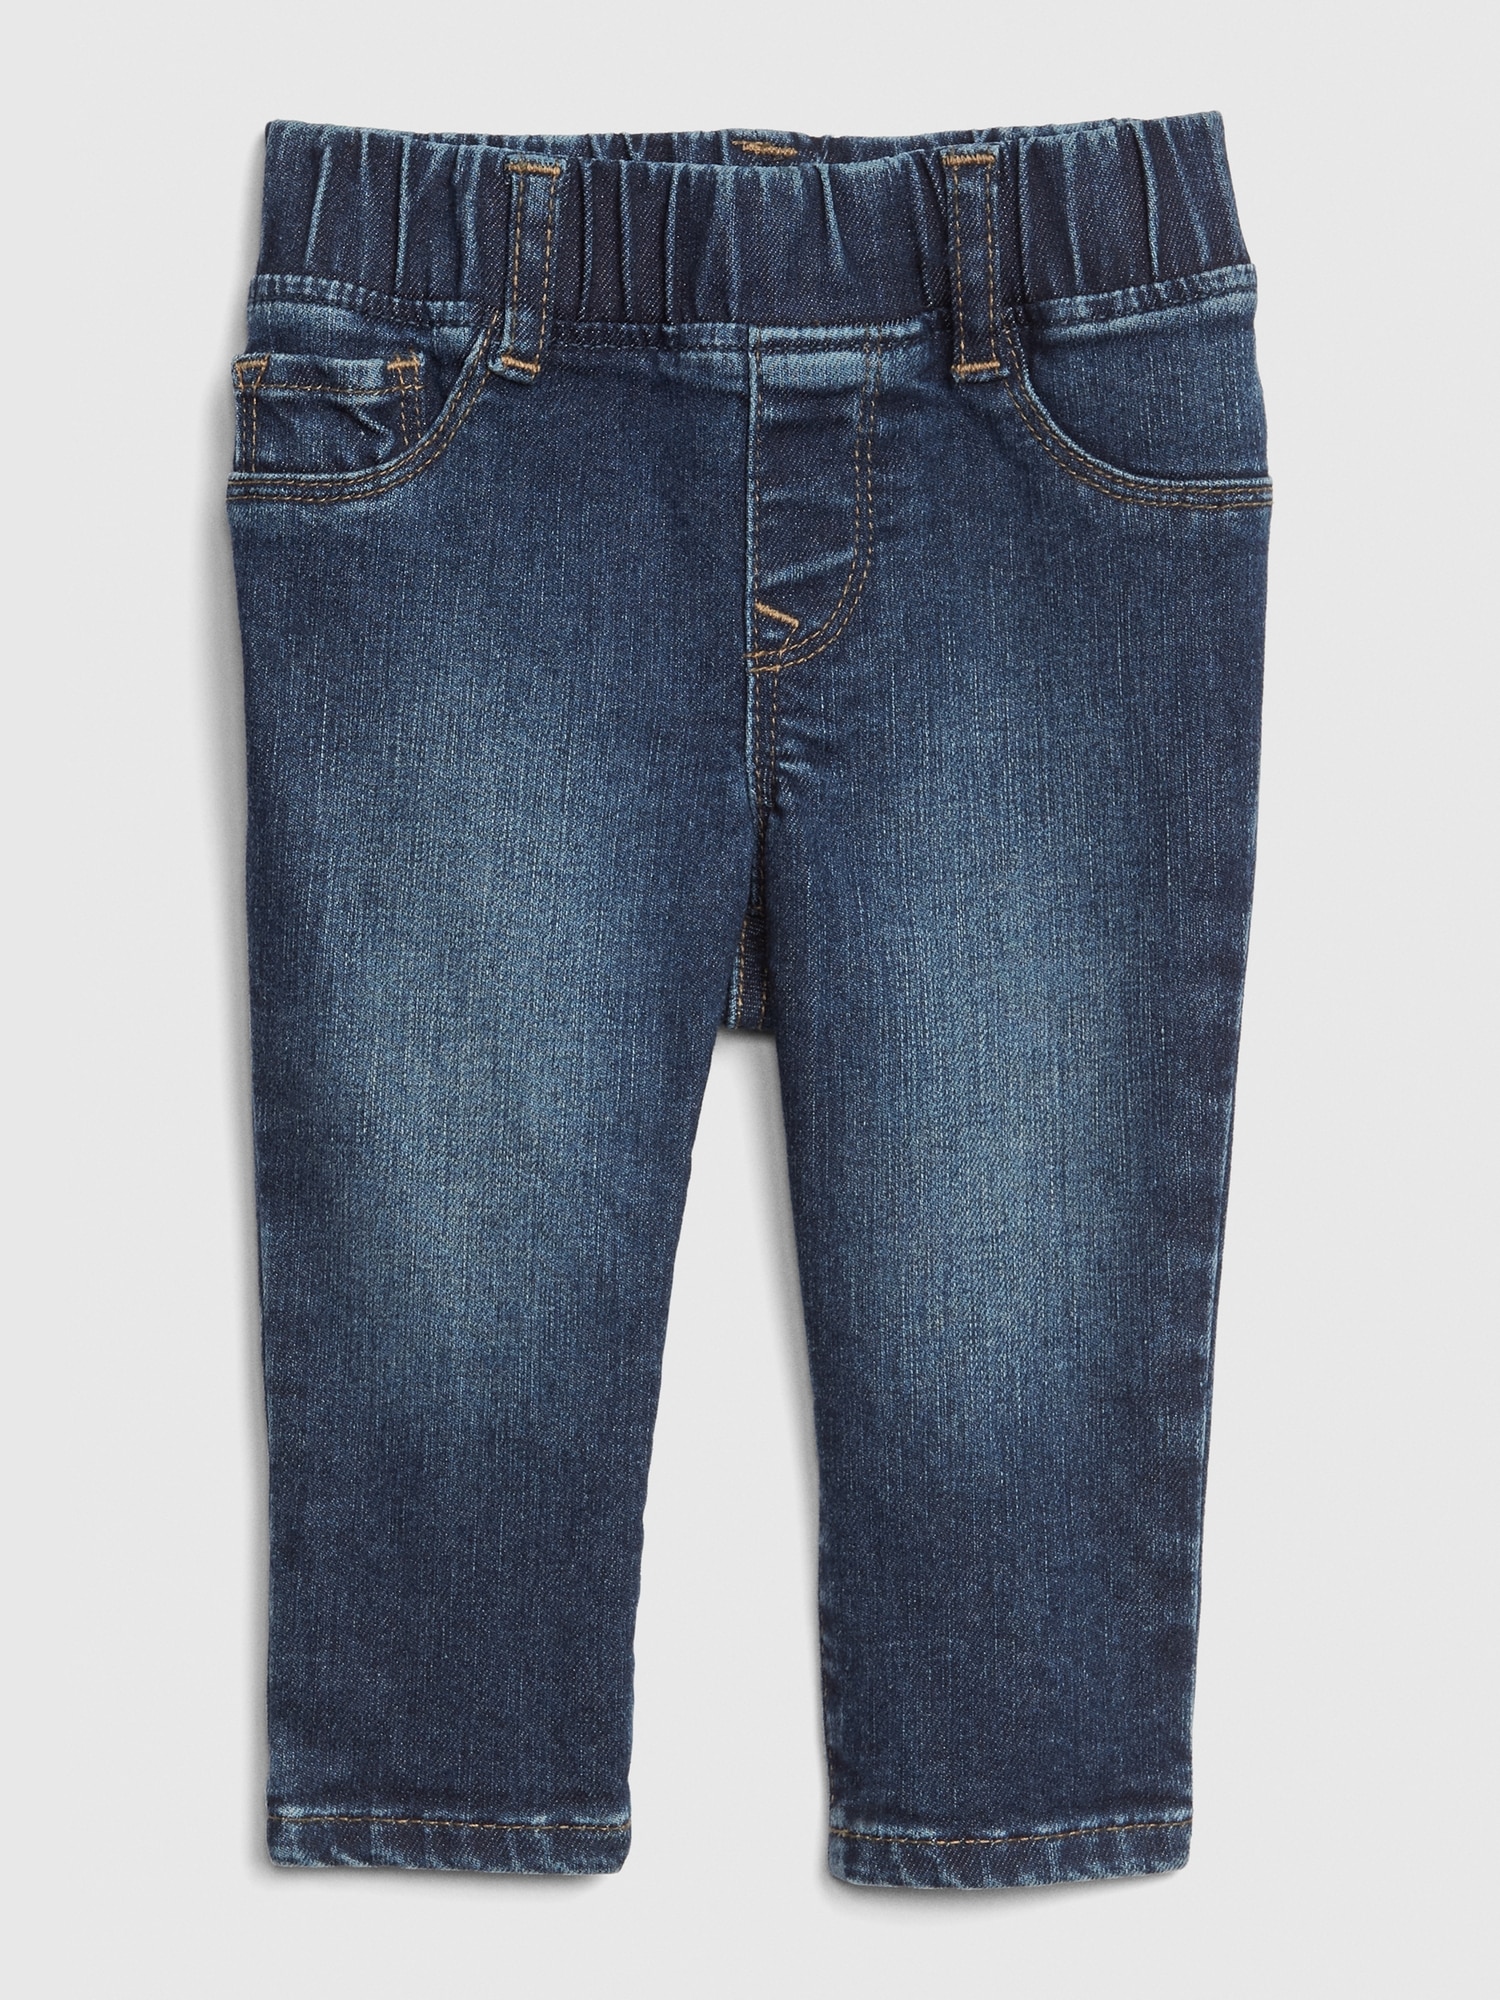 baby gap 1969 jeans